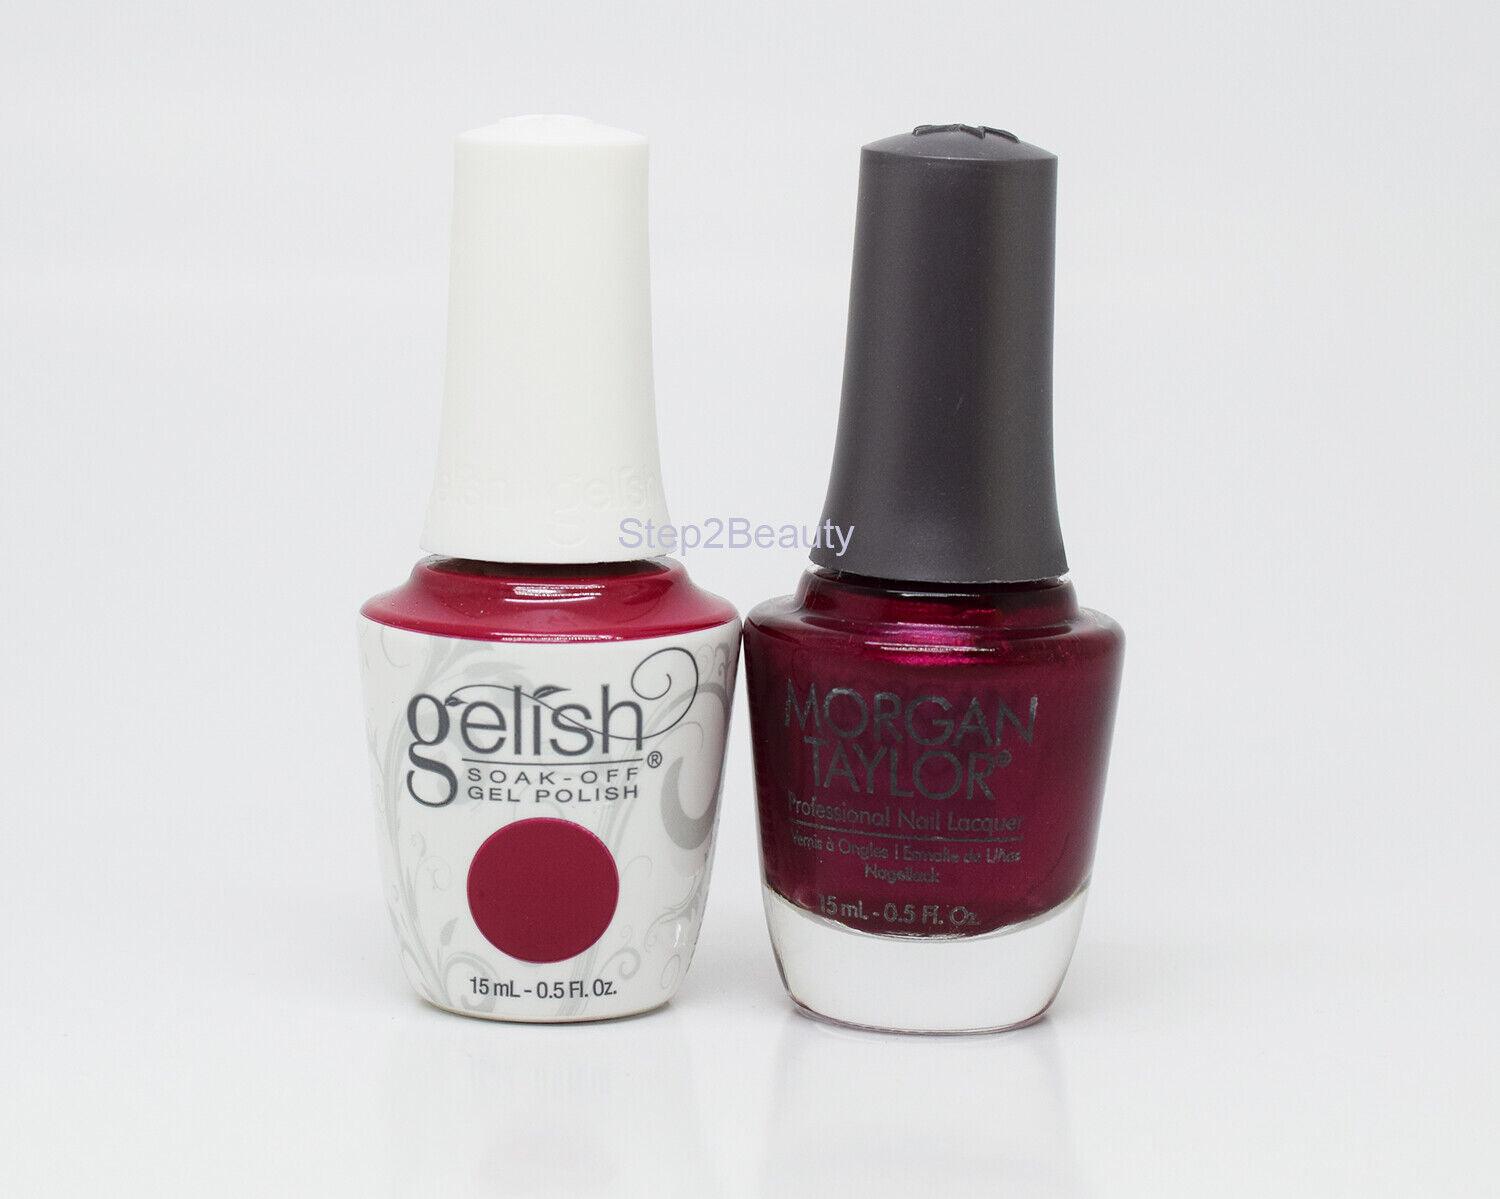 Gelish DUO Soak Off Gel Polish + Morgan Taylor Nail Lacquer - #848 Rose Garden